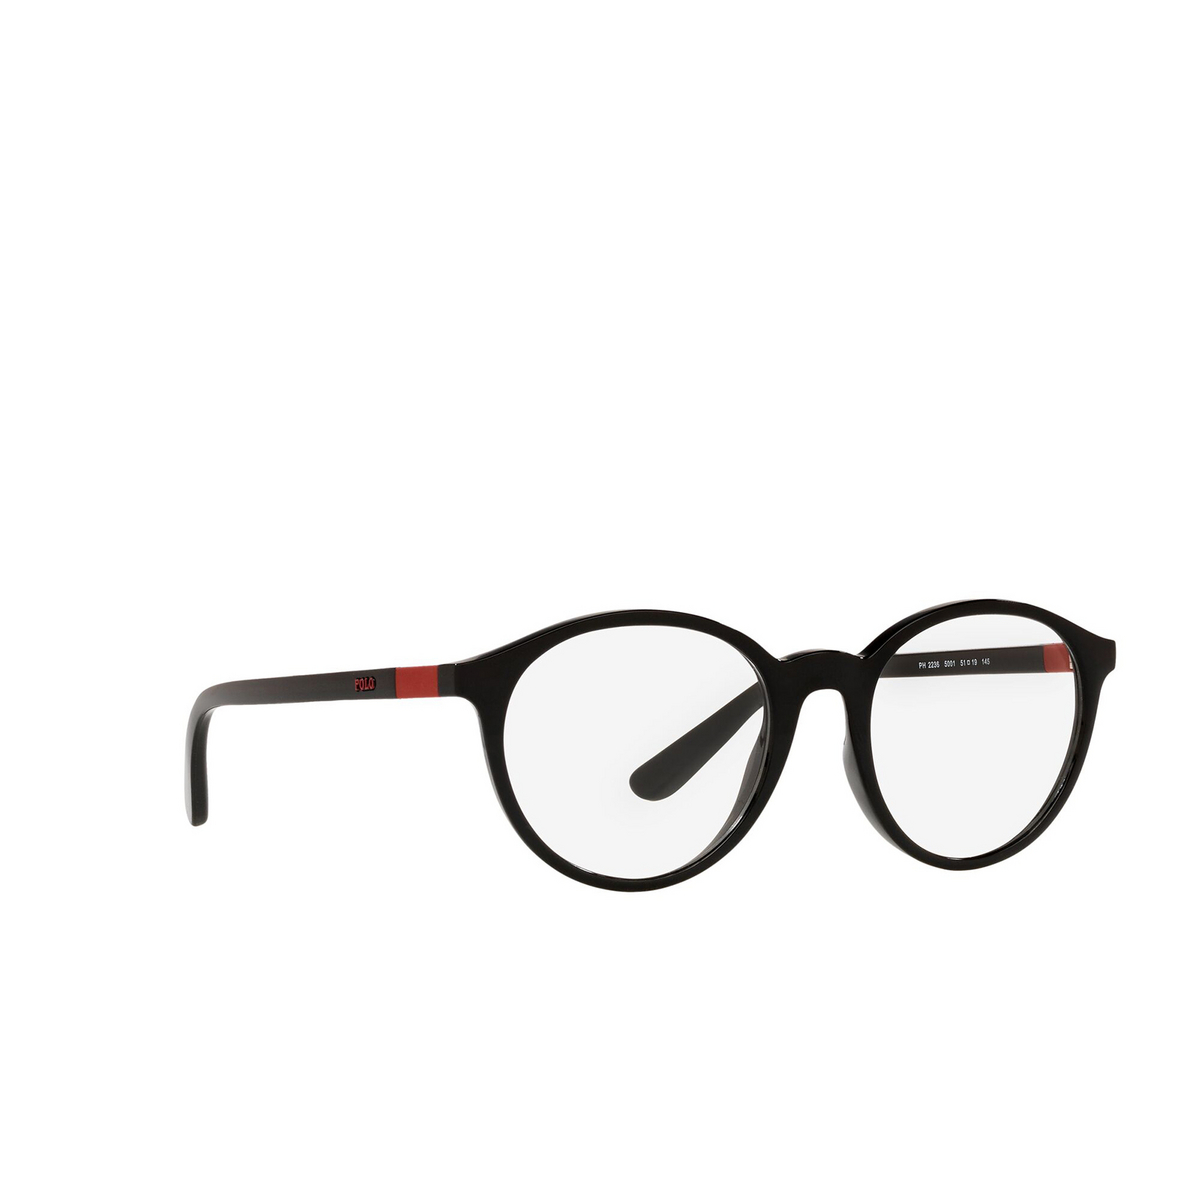 Polo Ralph Lauren® Round Eyeglasses: PH2236 color Shiny Black 5001 - three-quarters view.